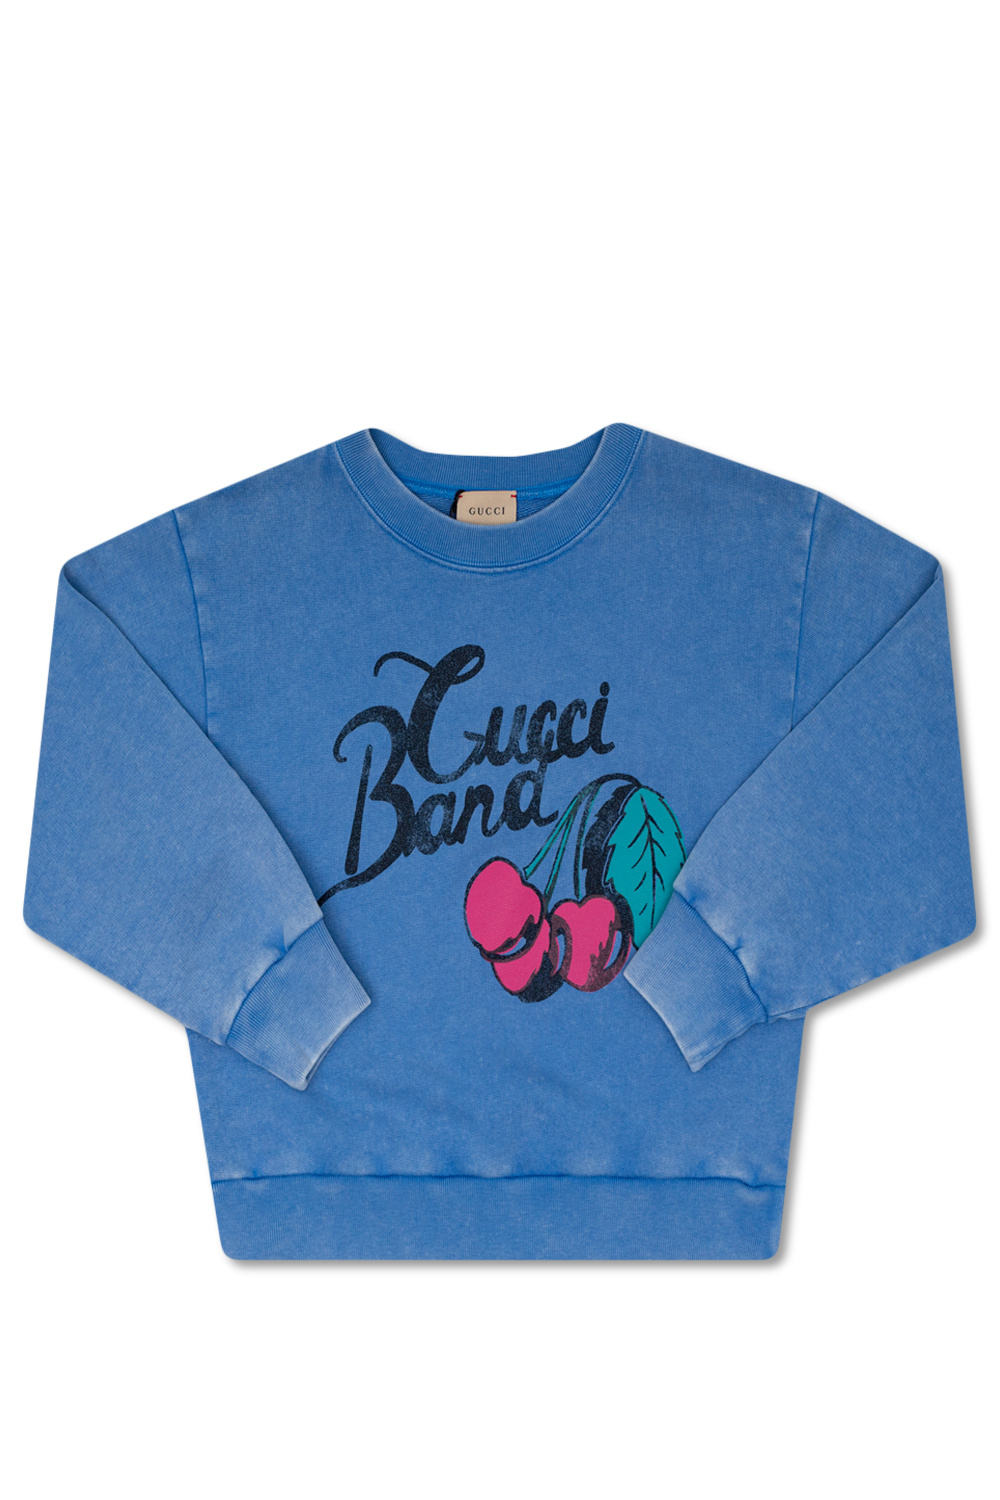 gucci sandal Kids Printed sweatshirt